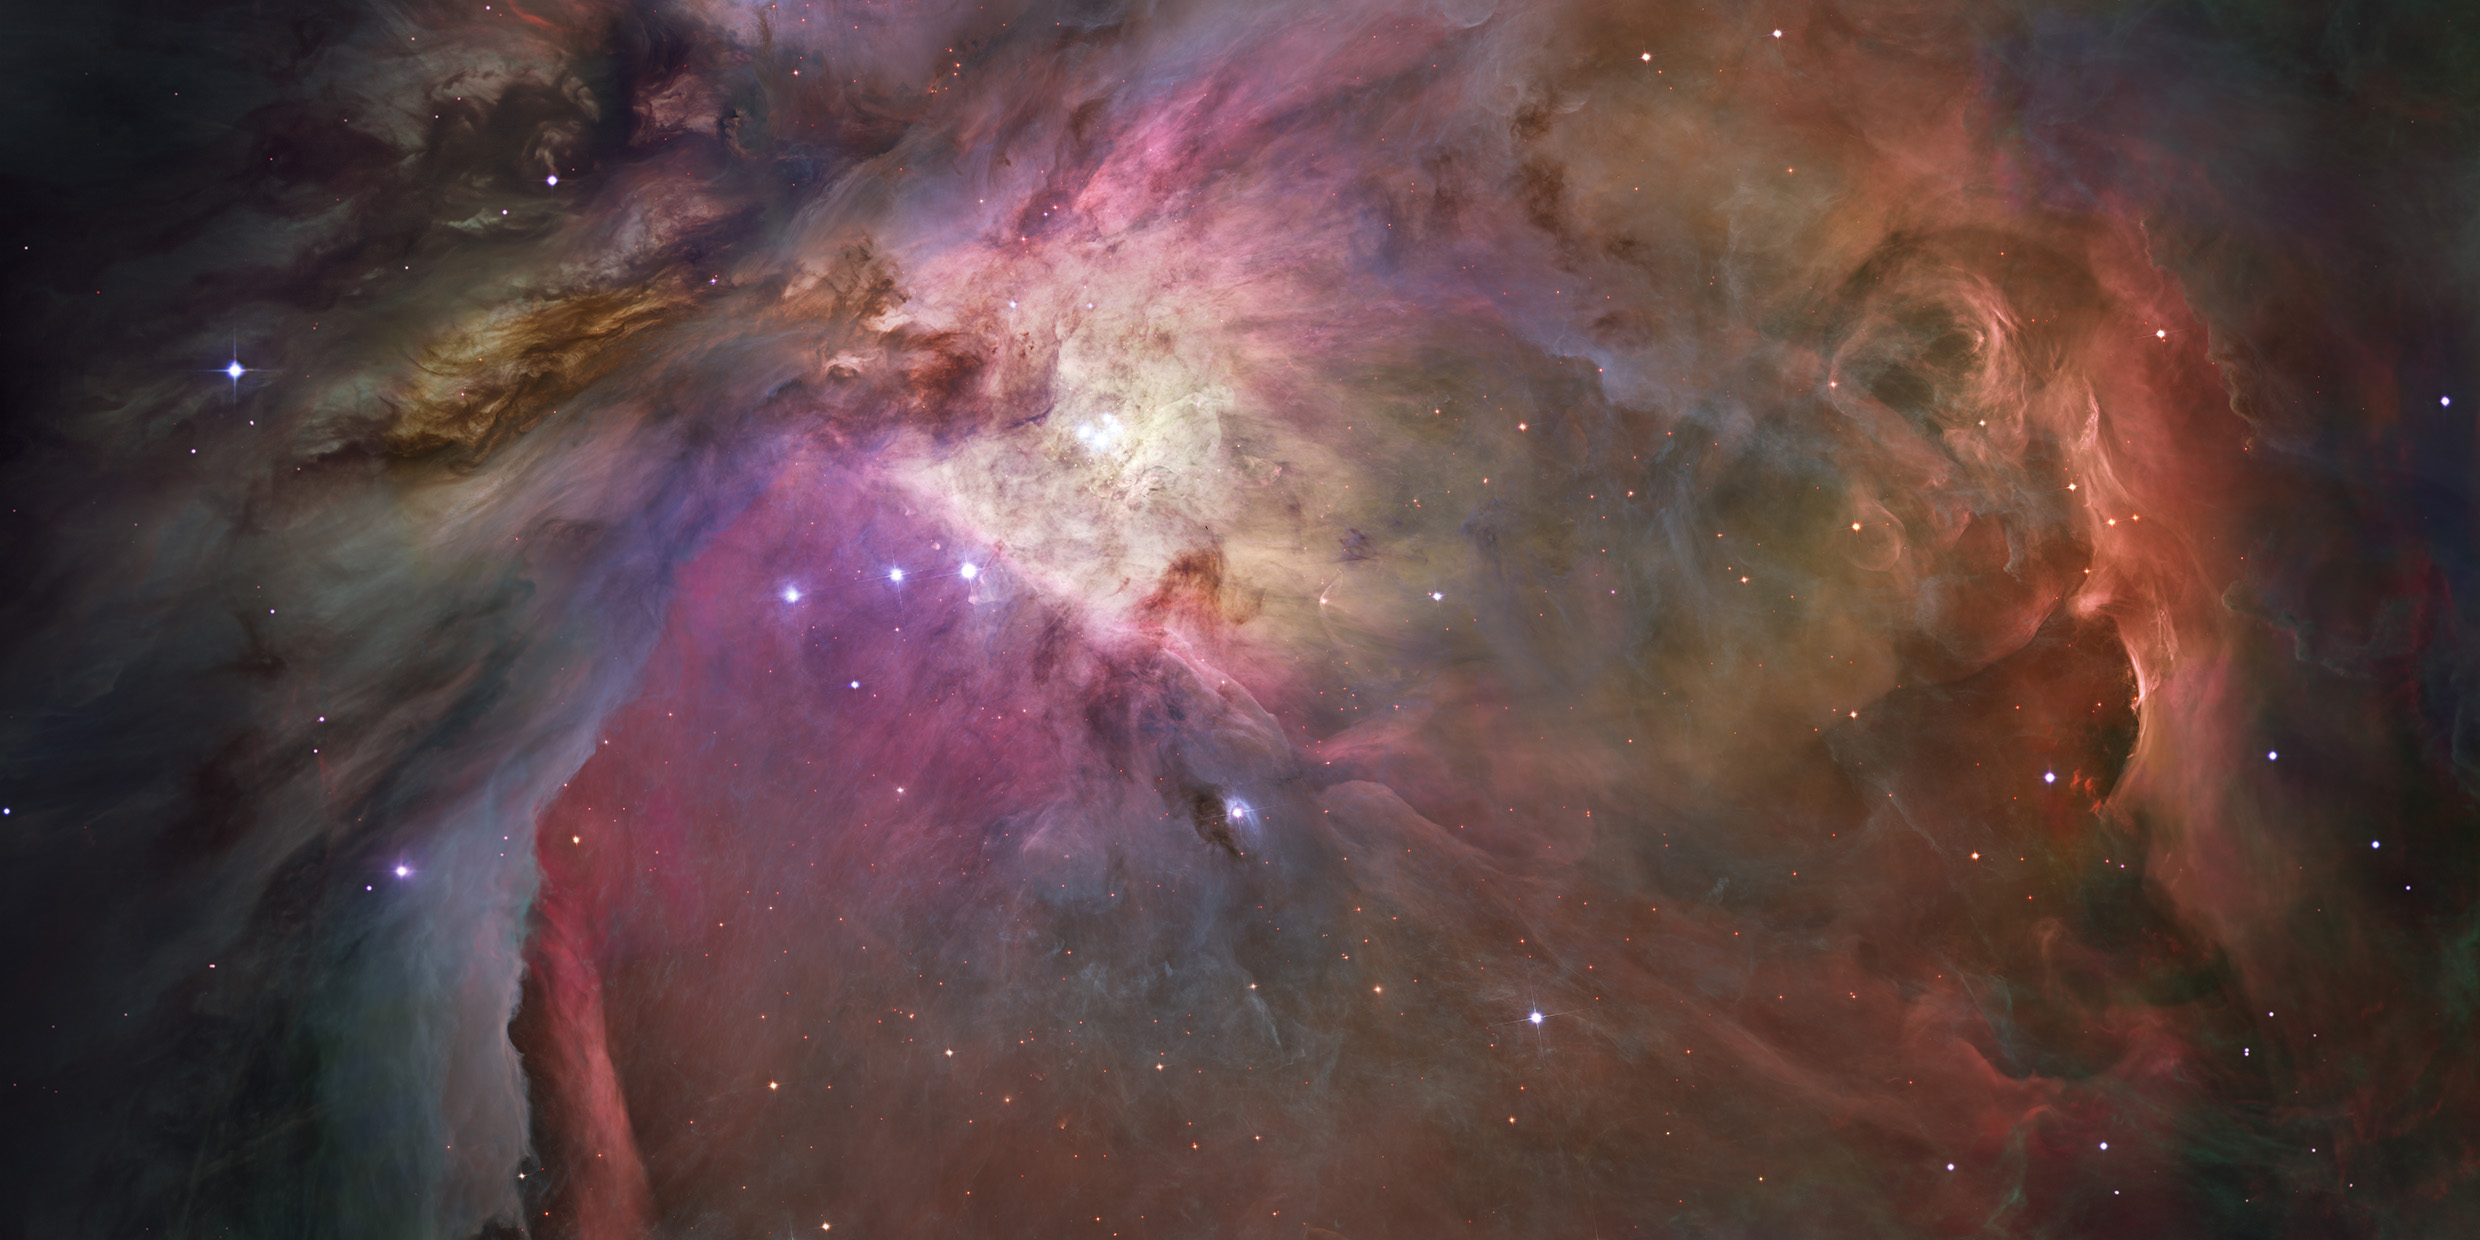 Astronomical image of a multi-colored nebula